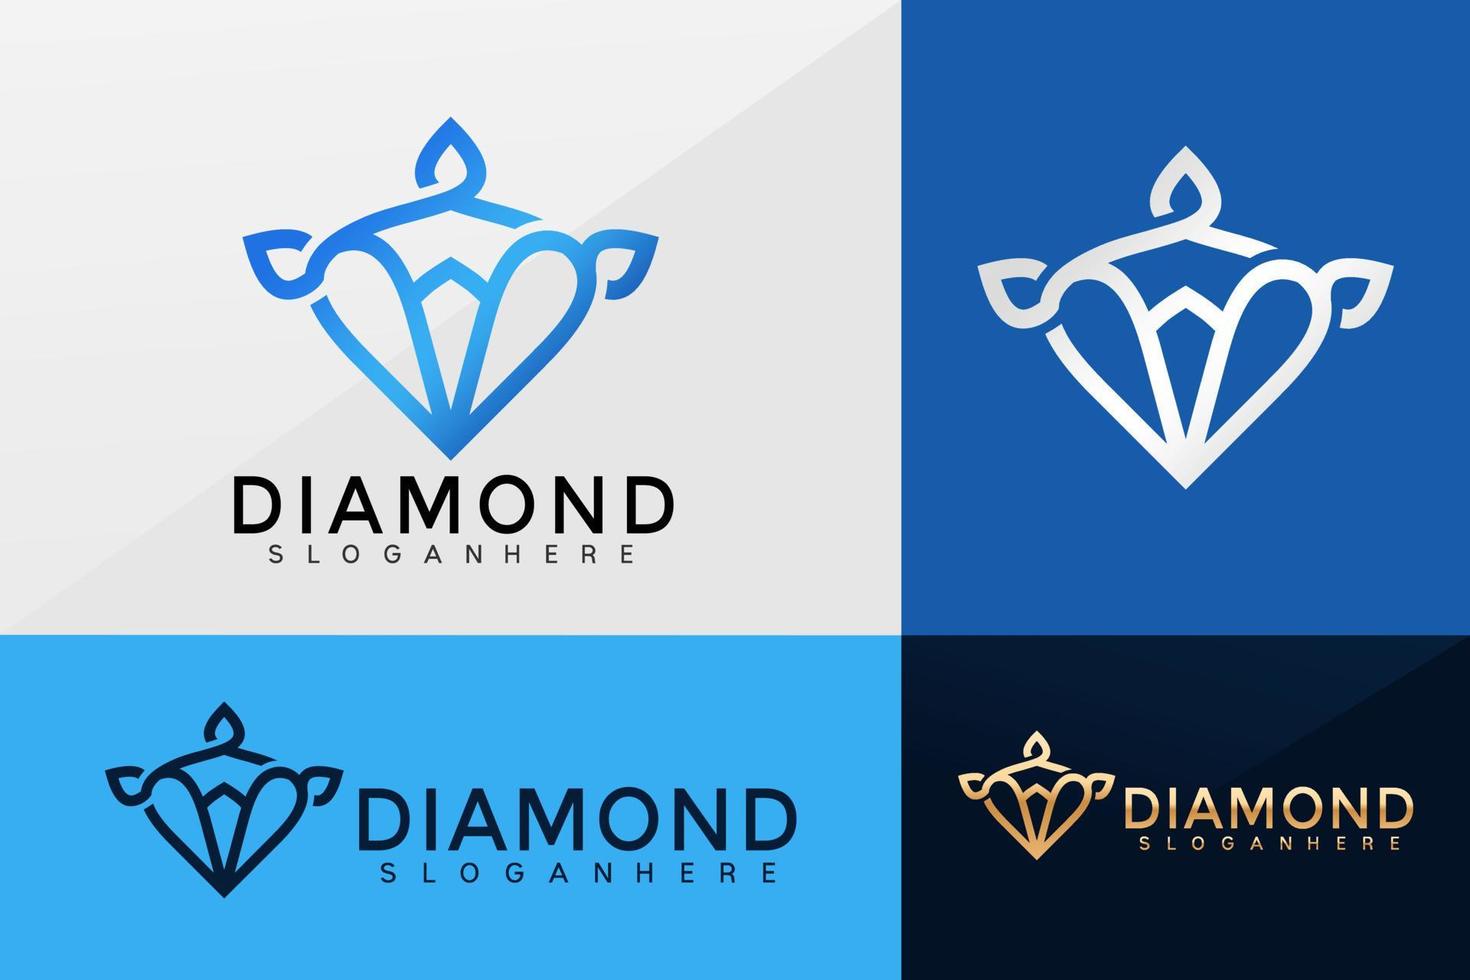 vetor de logotipo de negócios de joias de diamante, design de logotipos de identidade de marca, logotipo moderno, modelos de ilustração vetorial de designs de logotipo